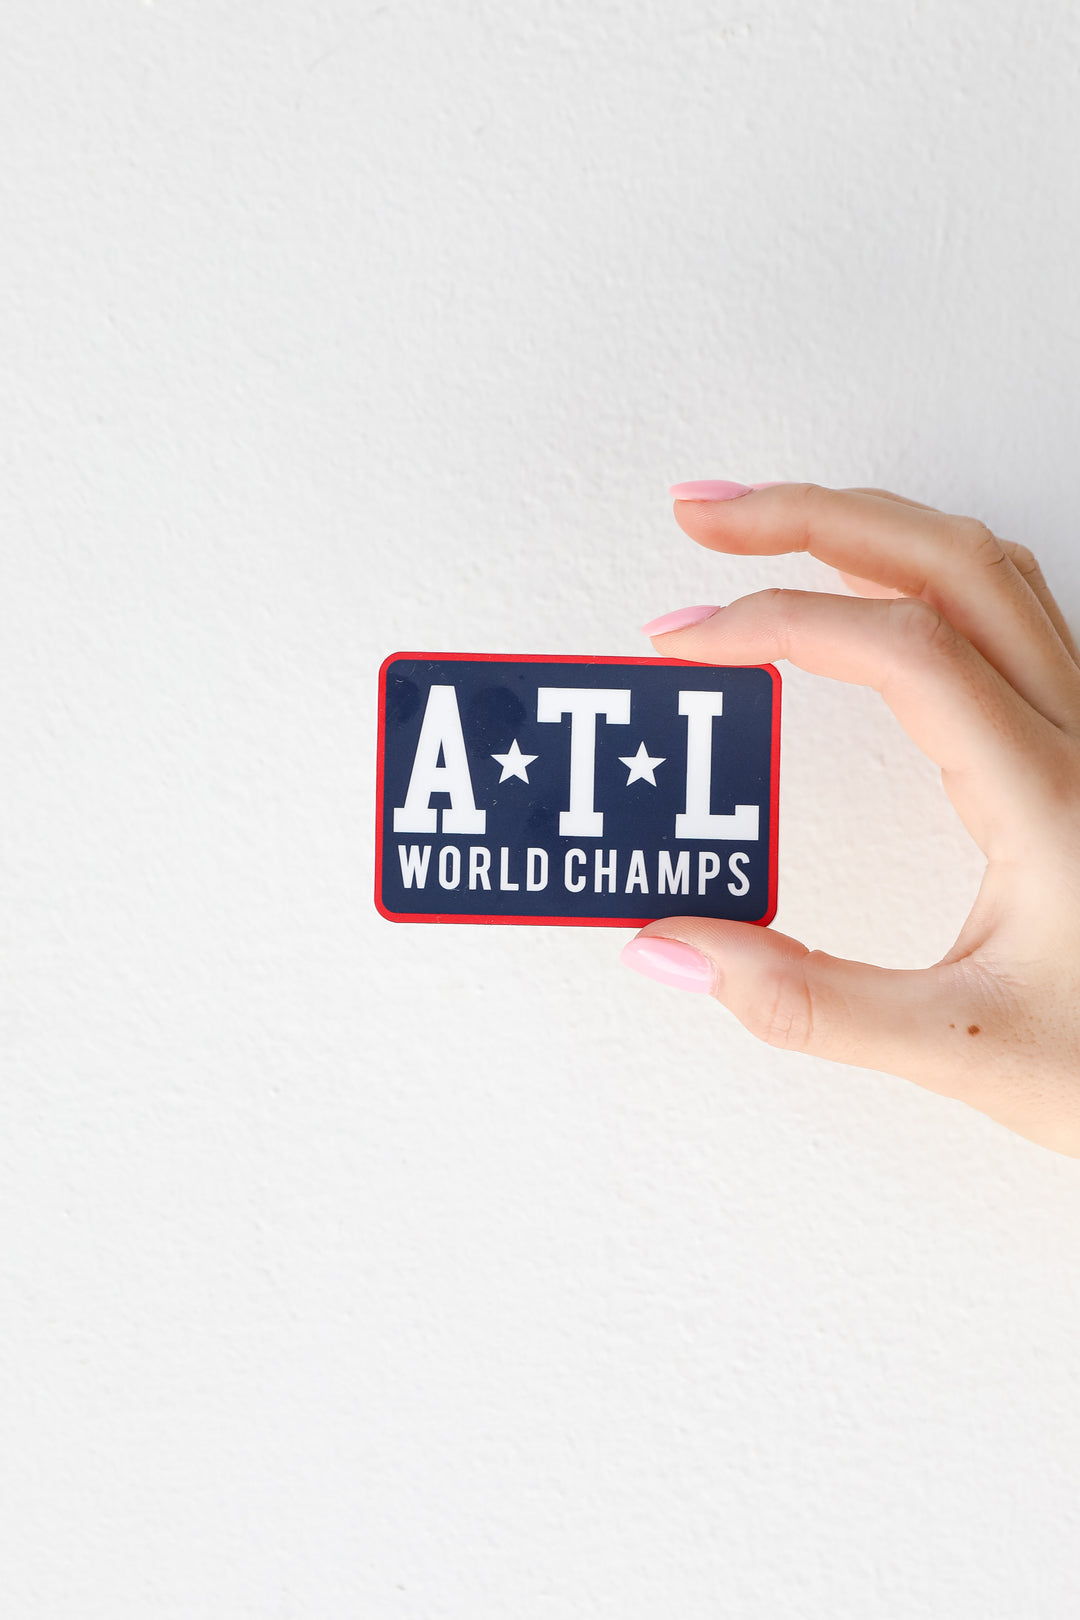 ATL World Champs Sticker